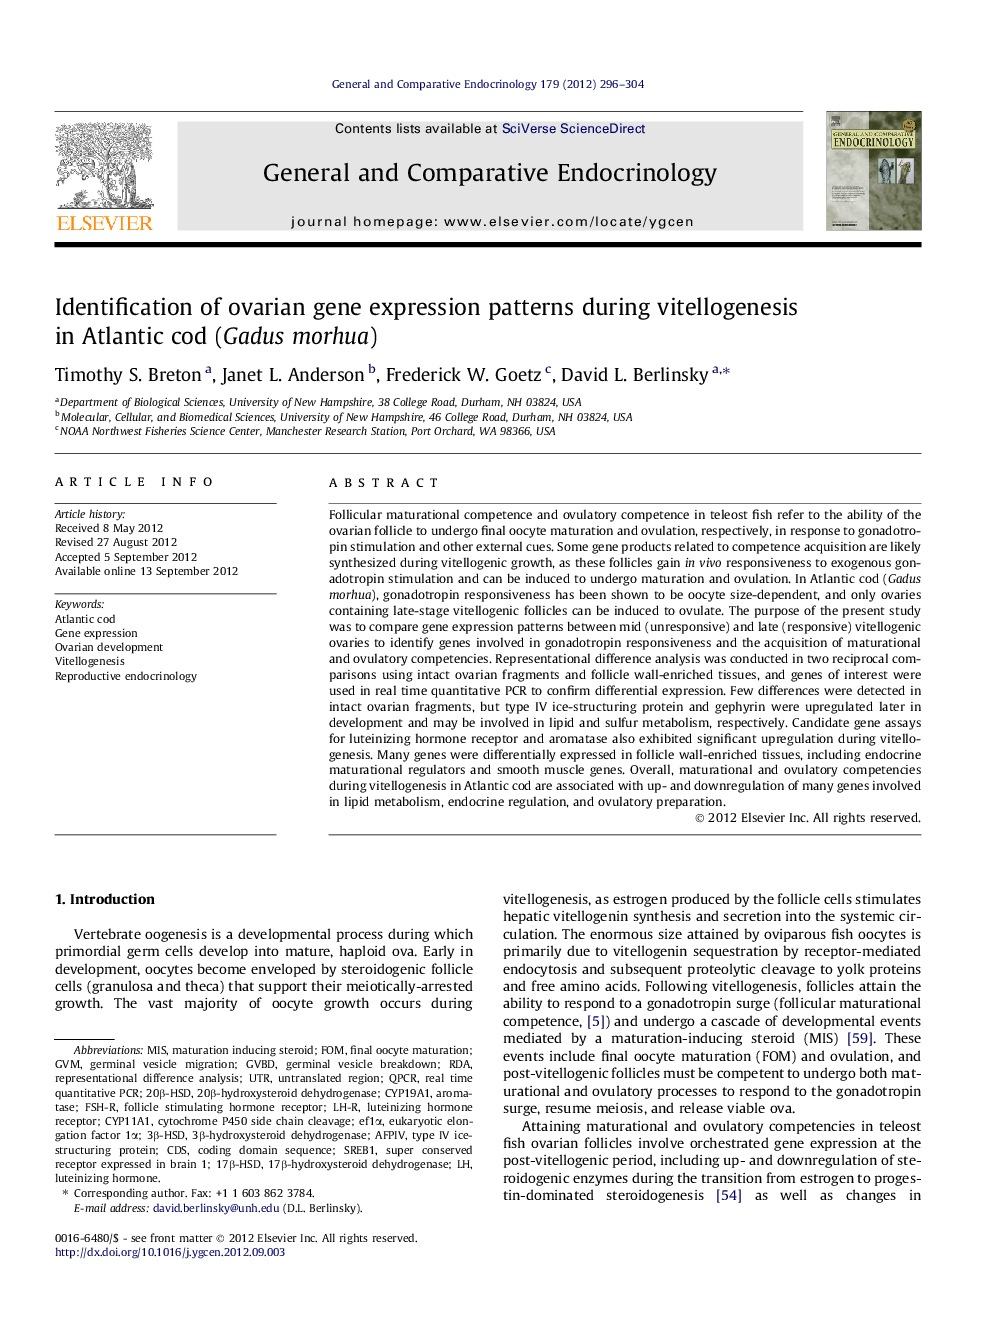 Identification of ovarian gene expression patterns during vitellogenesis in Atlantic cod (Gadus morhua)